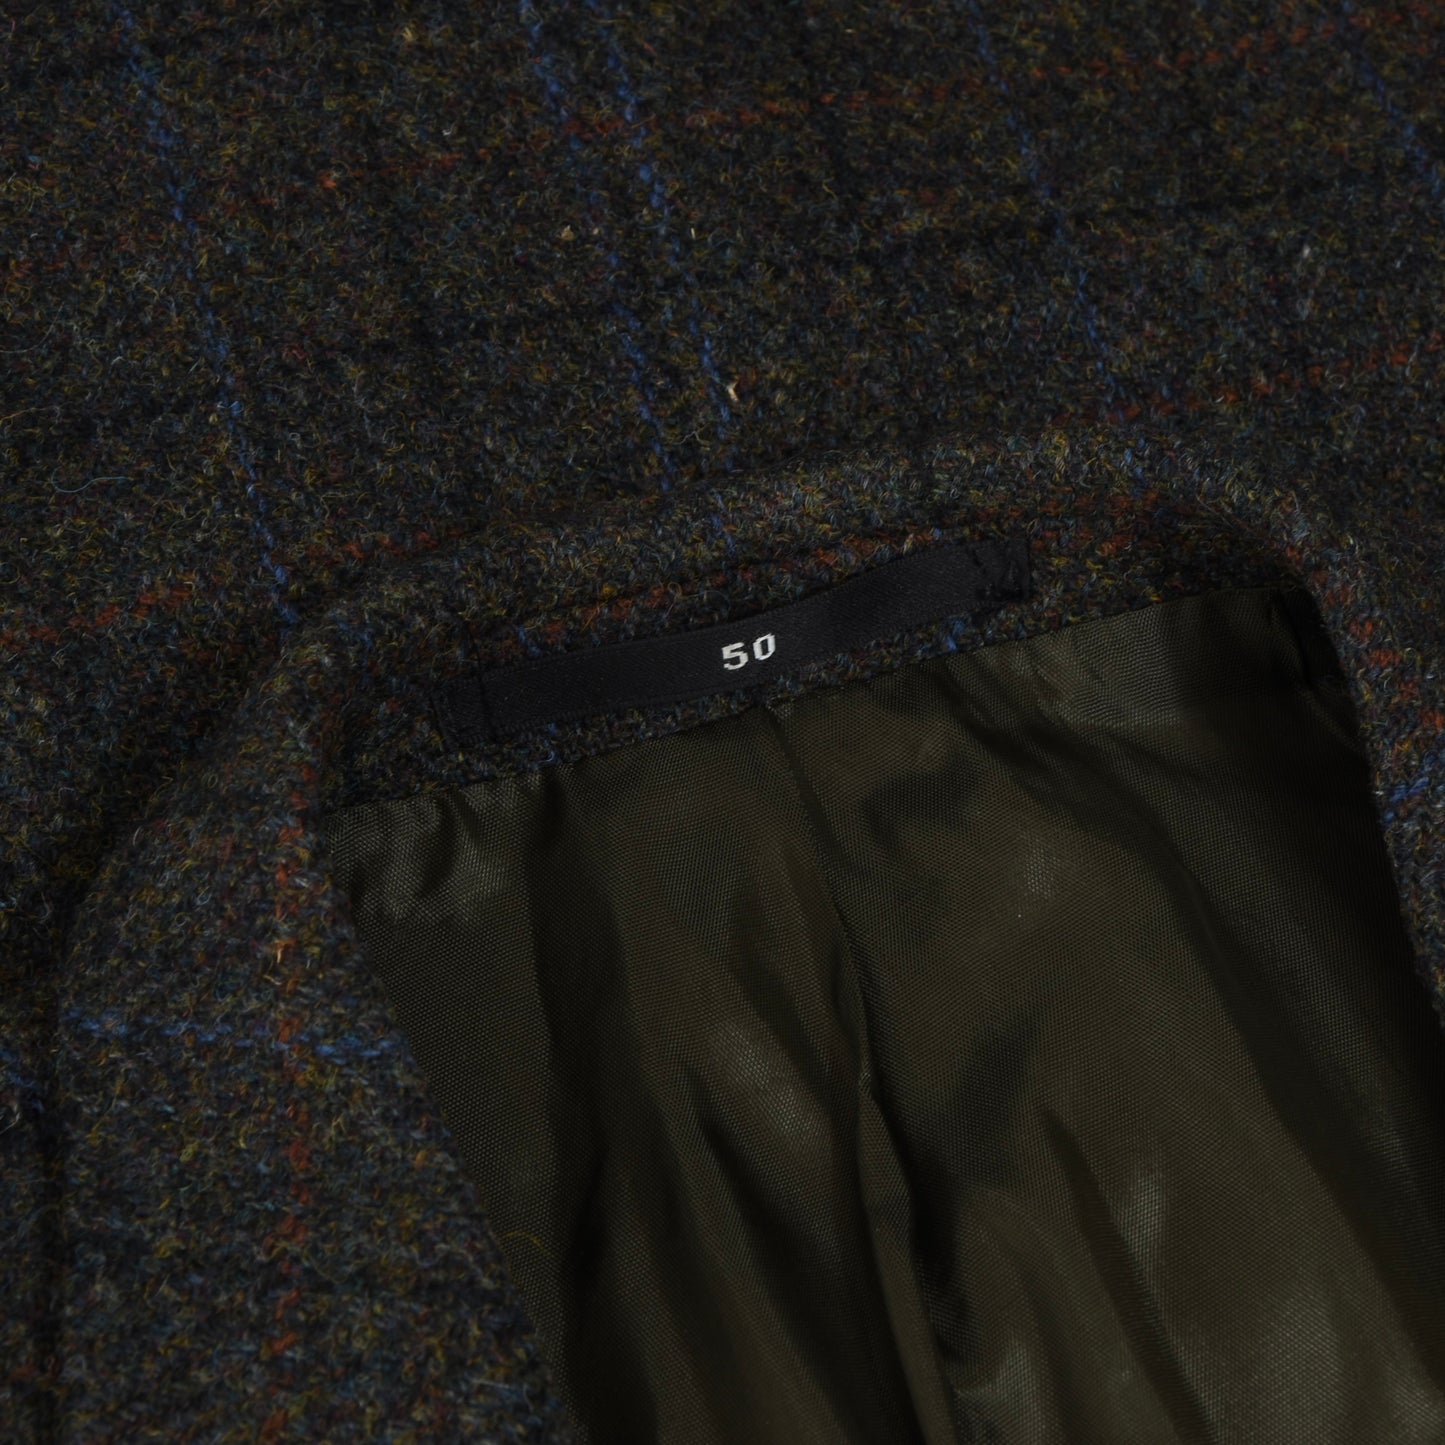 Harris Tweed Jacket ca. 55cm Chest - Green Windowpane